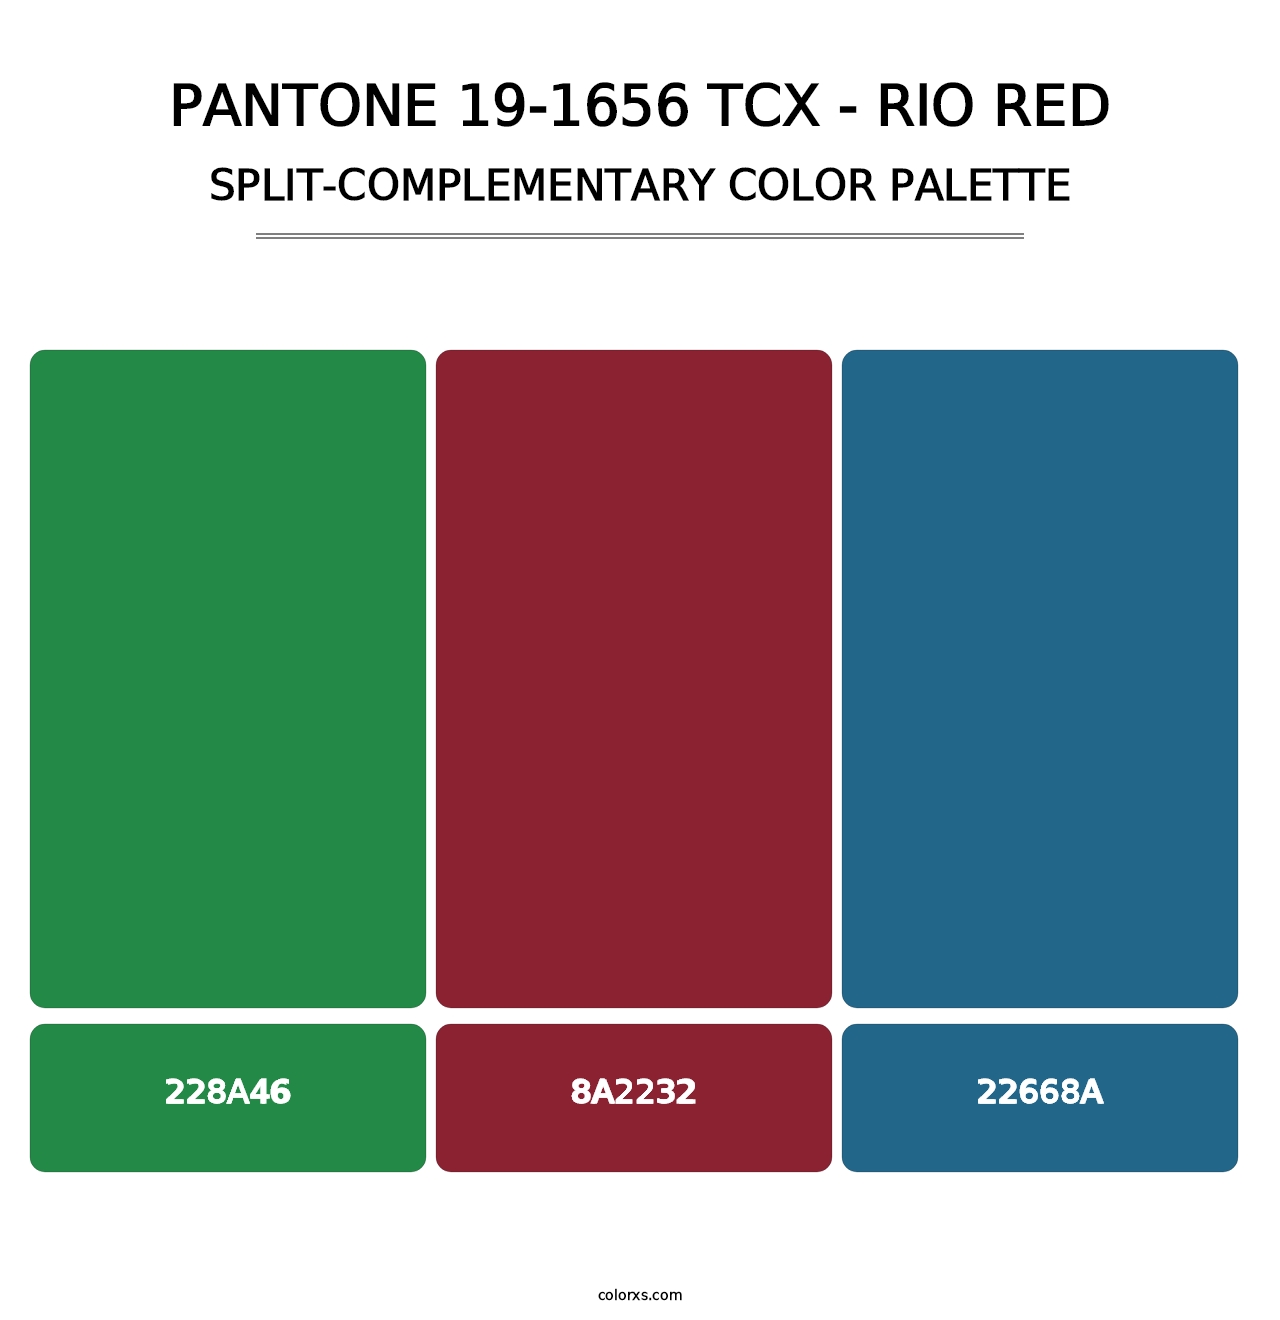 PANTONE 19-1656 TCX - Rio Red - Split-Complementary Color Palette